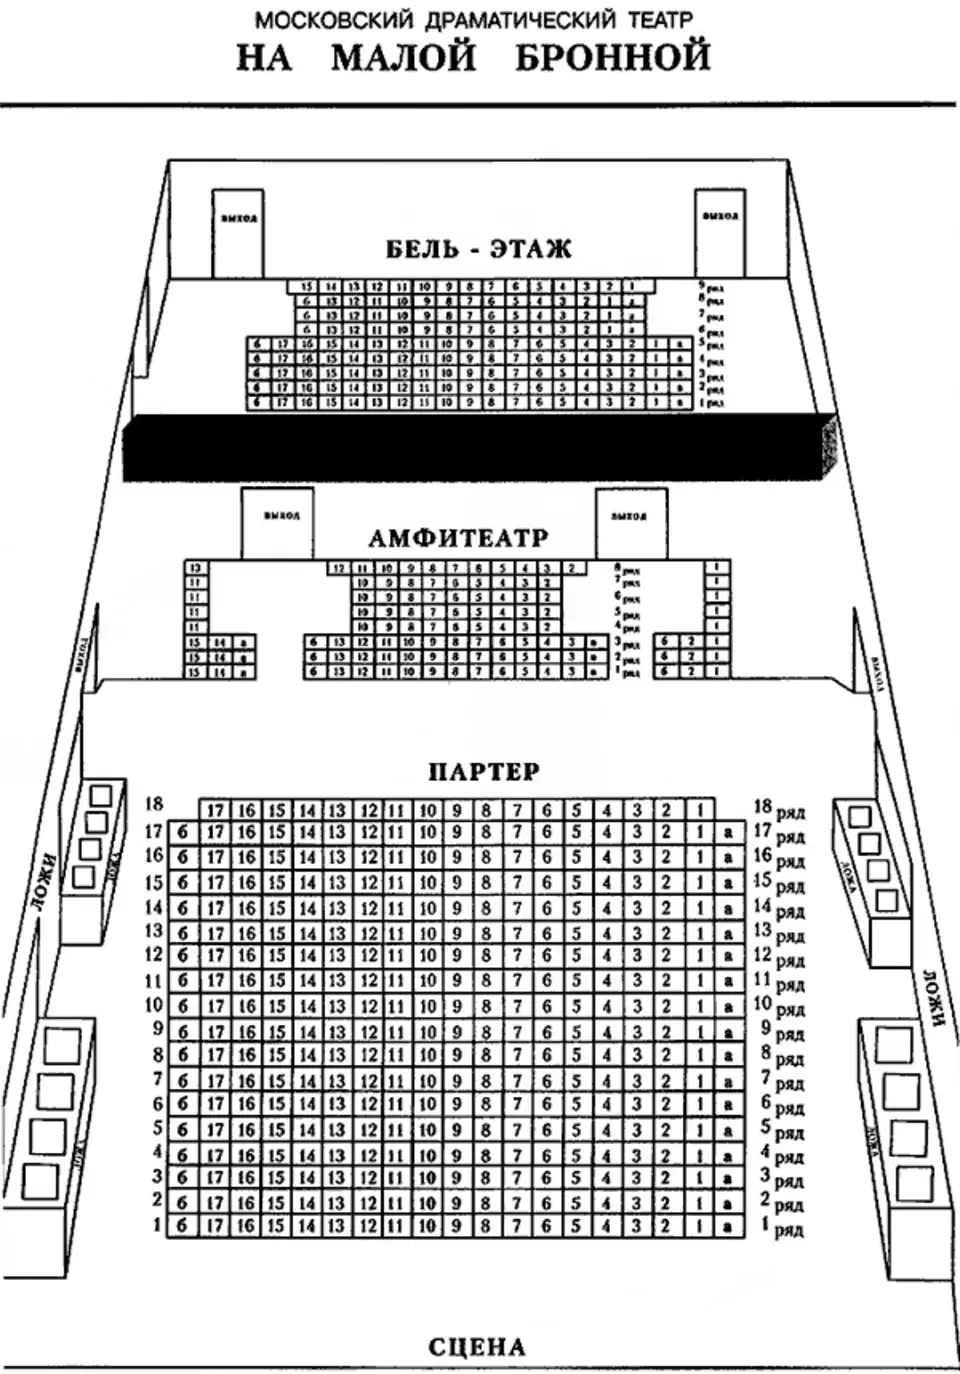 схема зала театра на ордынке